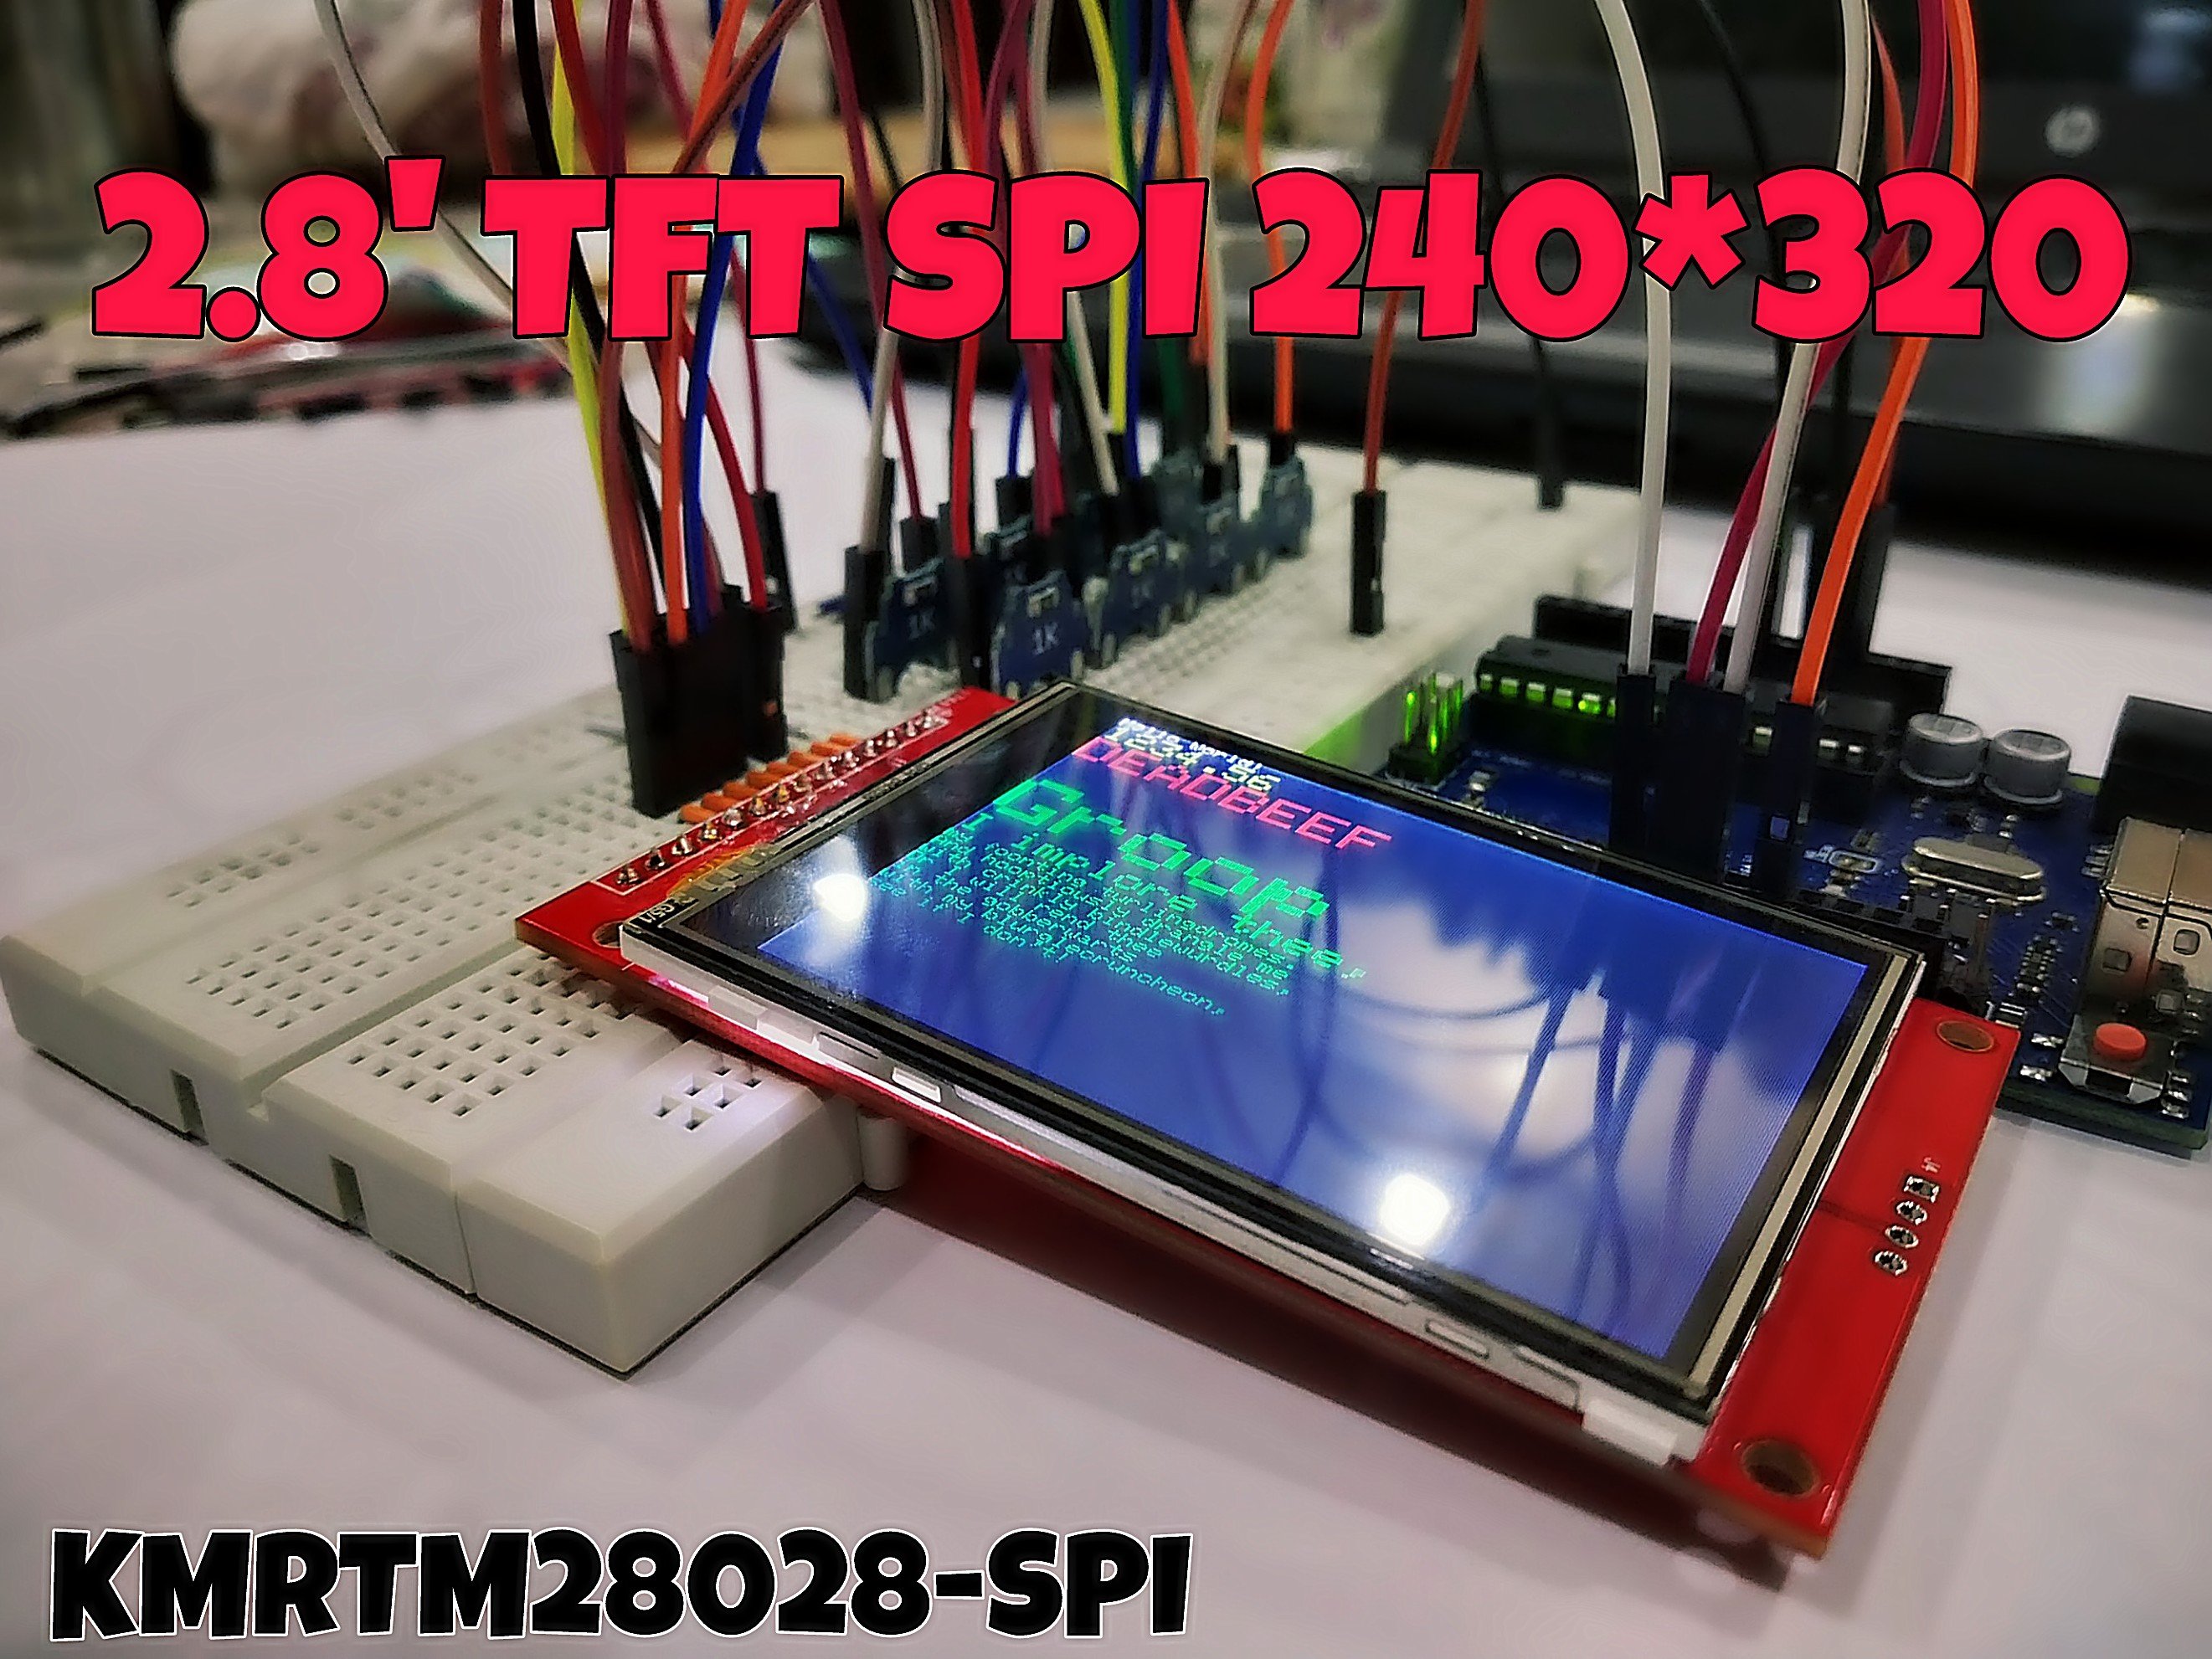 Screen 2.4" 240x320 Serial ILI9341 SPI Farb TFT LCD Display Arduino Raspberry pi